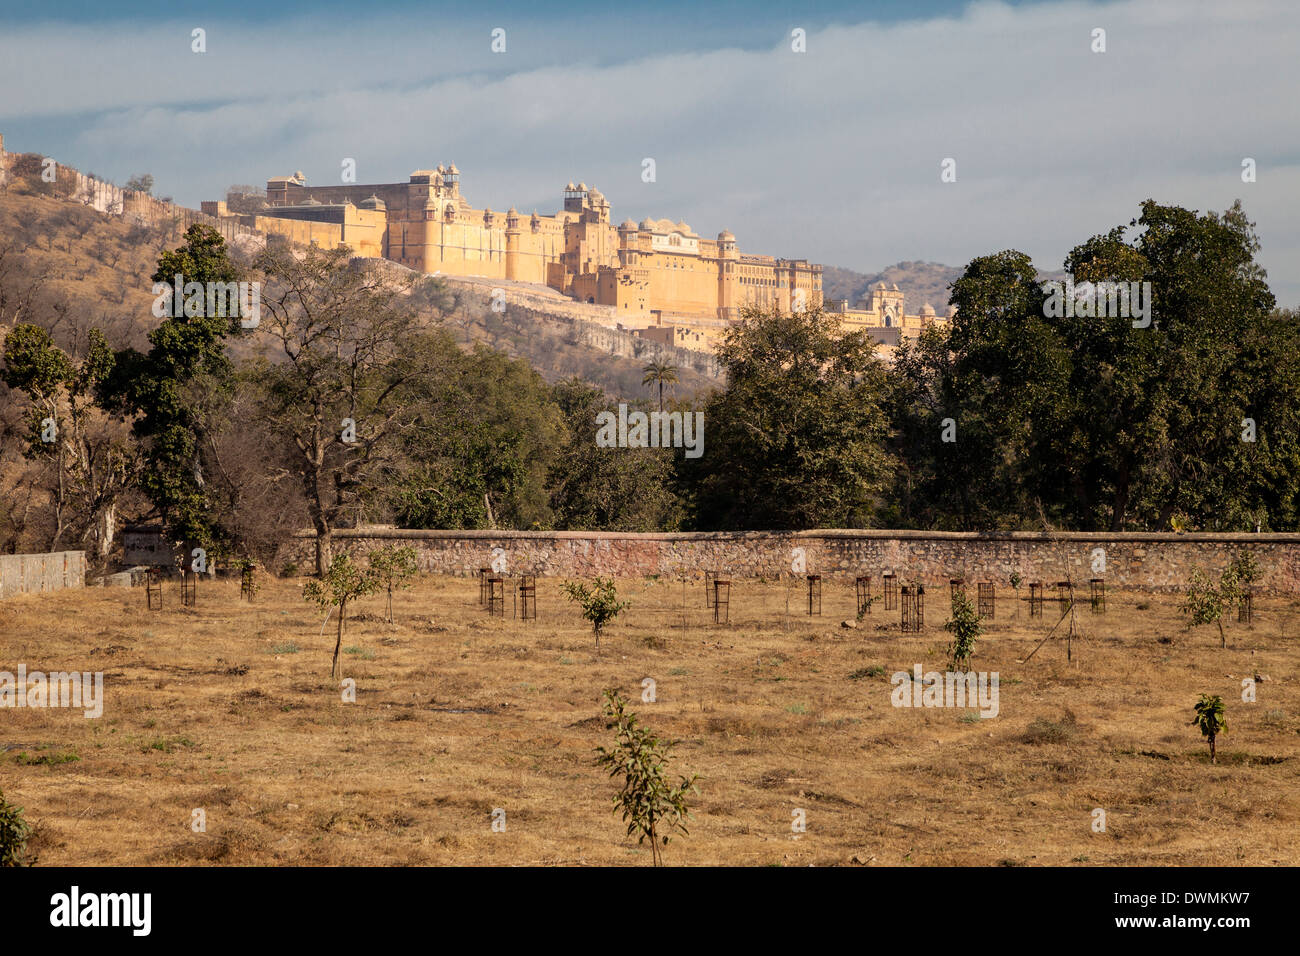 Amber (or Amer) Palace, near Jaipur, Rajasthan, India. Stock Photo